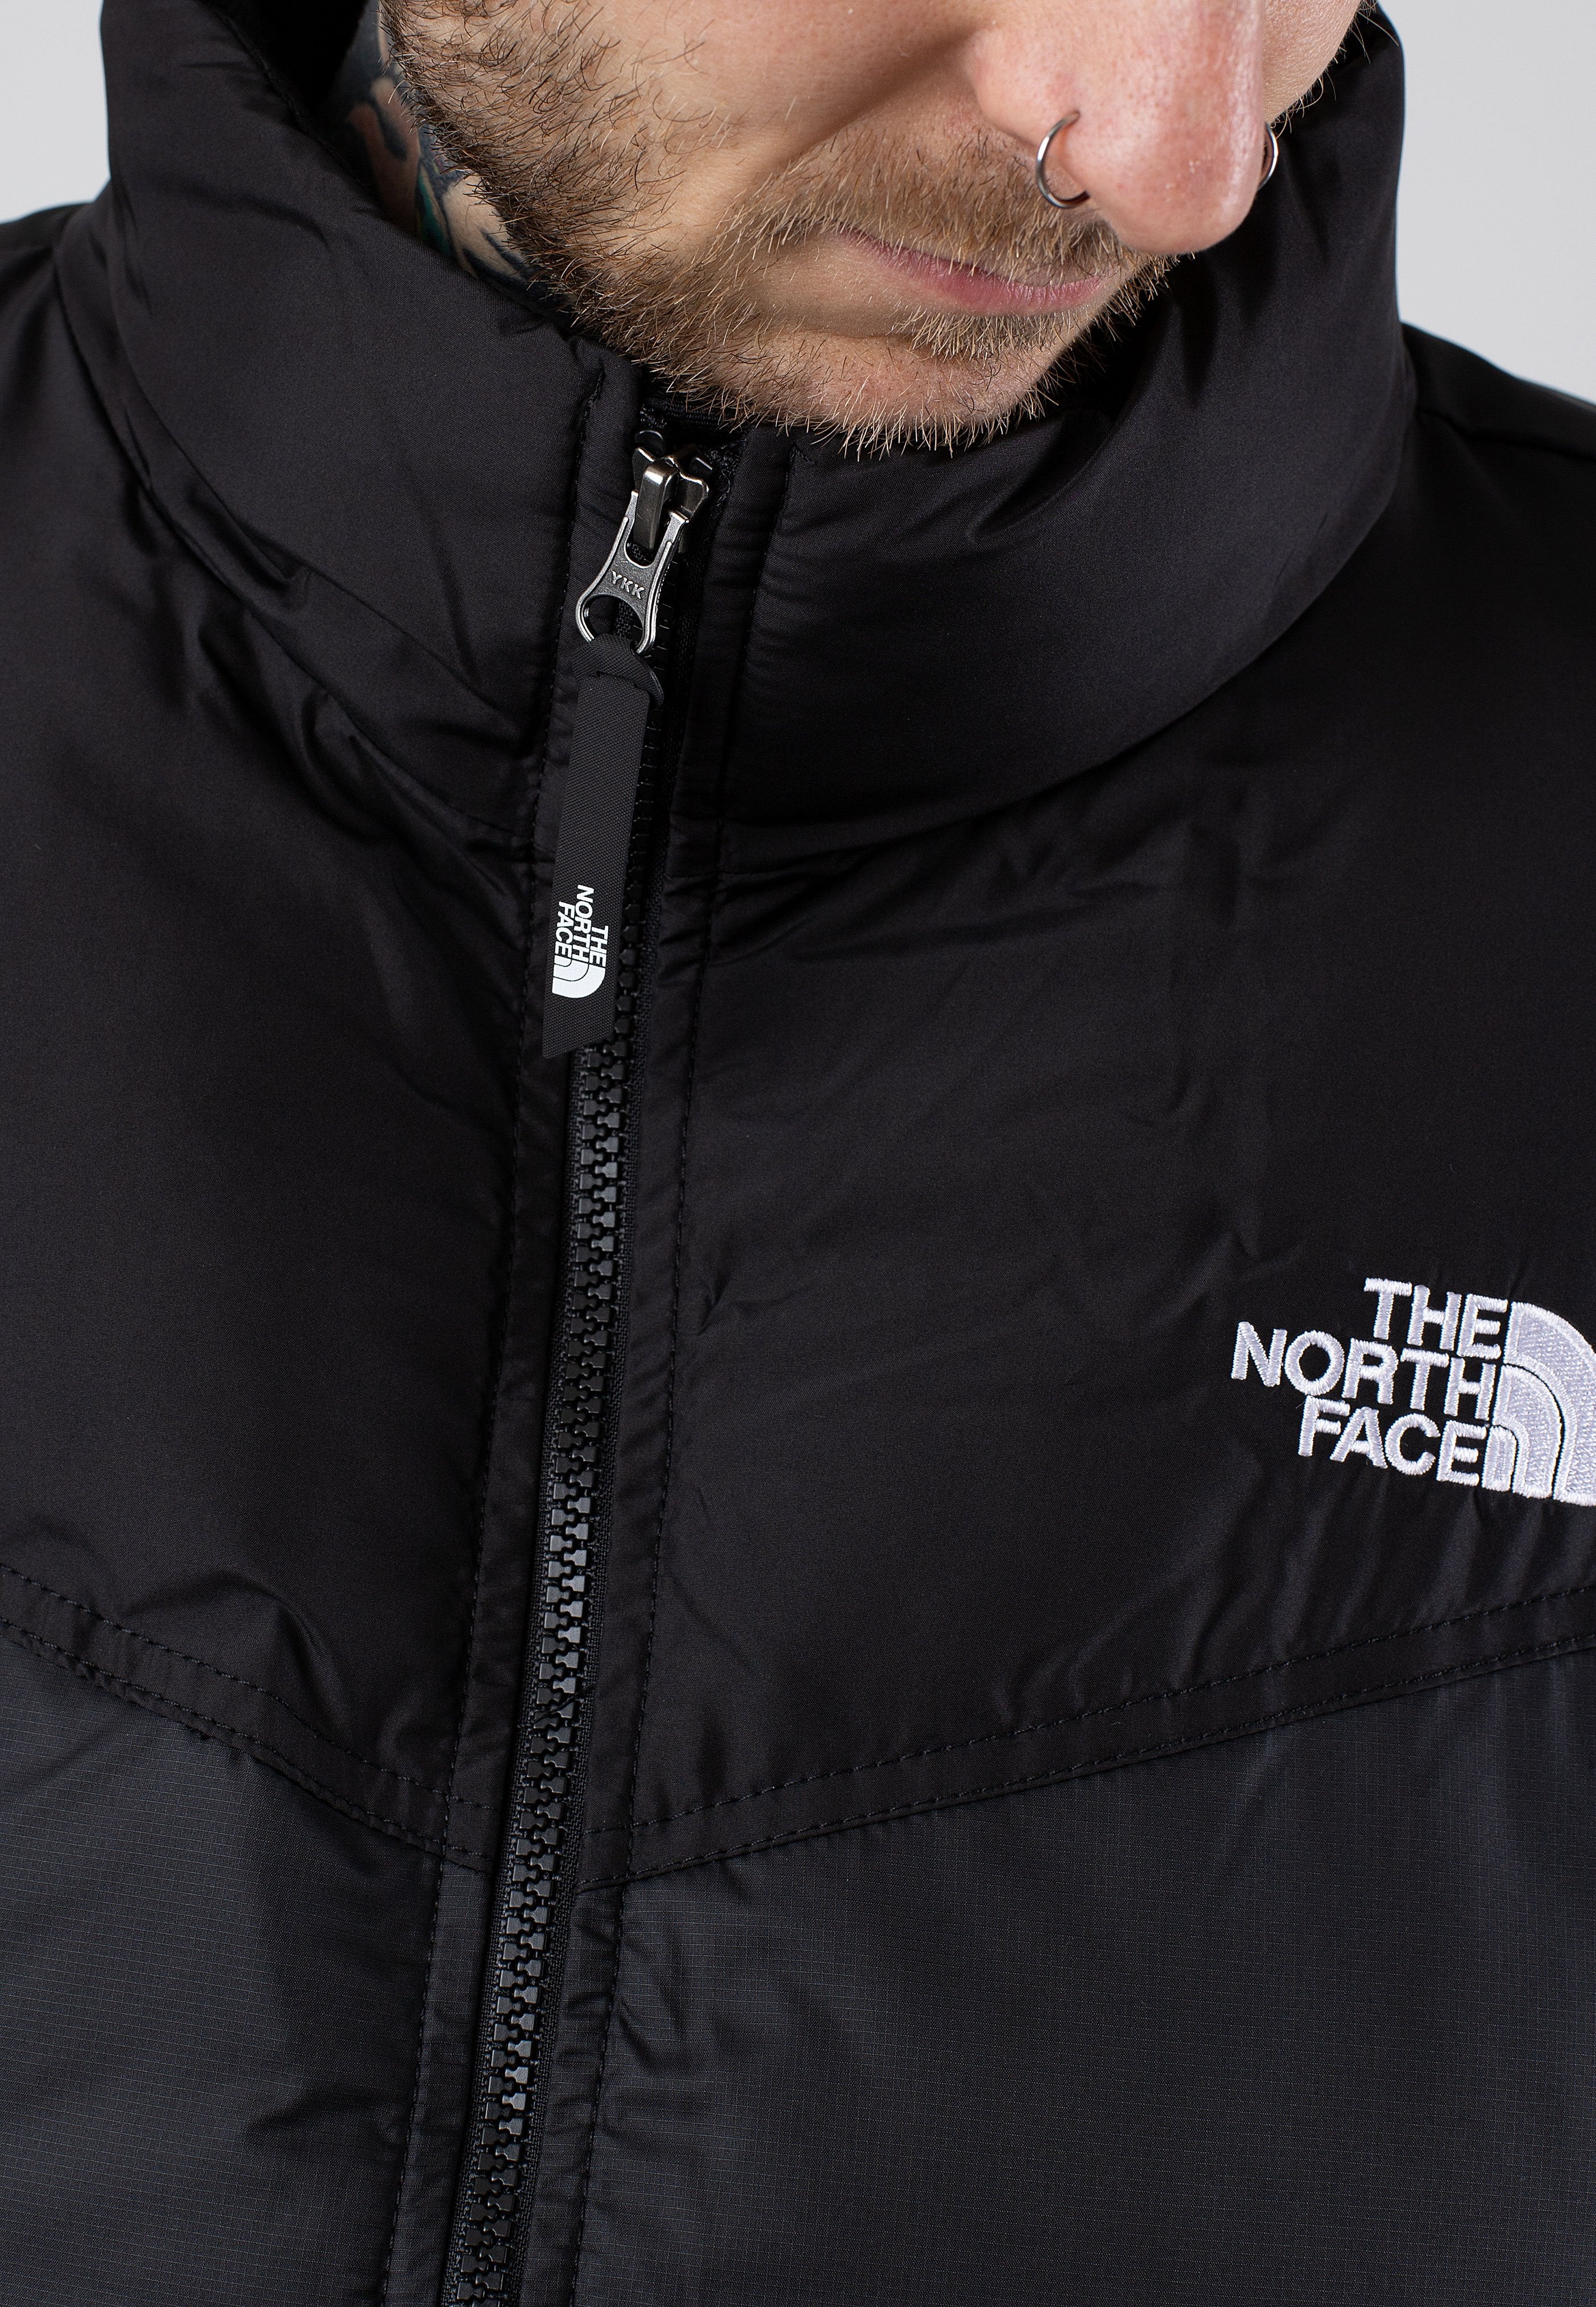 The North Face - Saikuru Tnf Black/Tnf Black - Jacket